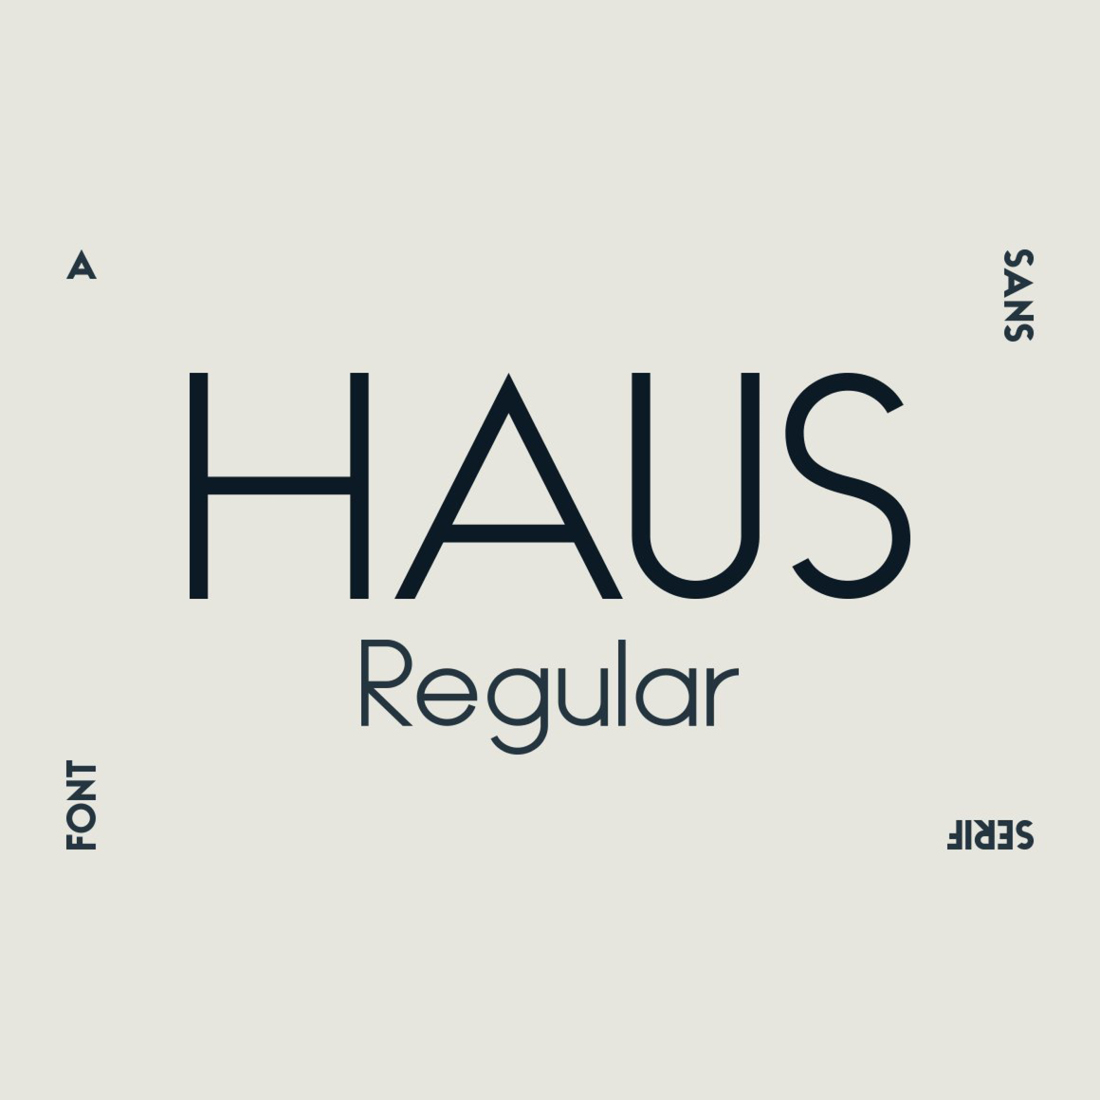 HAUS Sans Regular cover image.